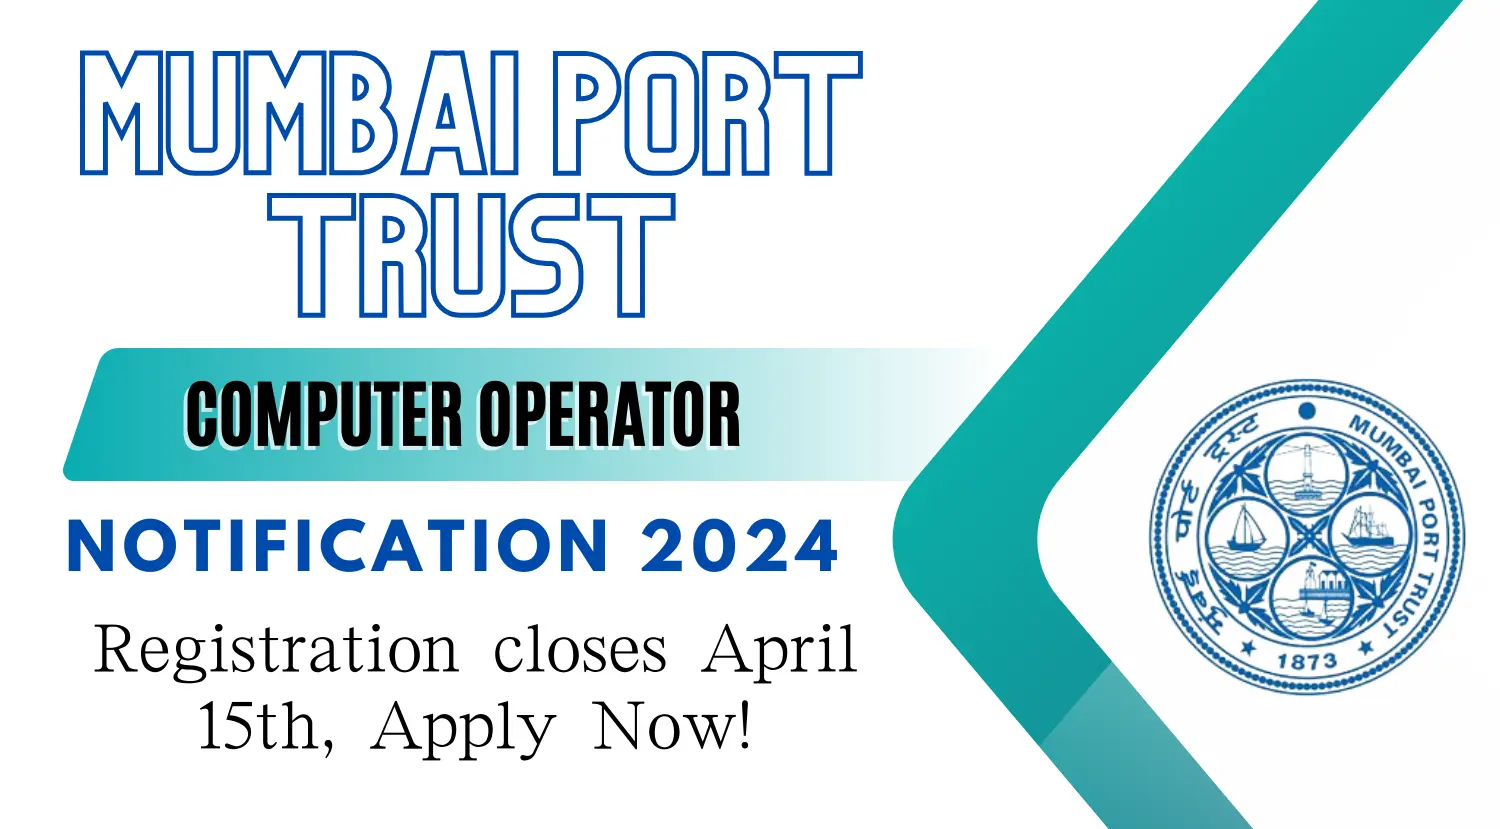 Mumbai Port Trust Vacancy 2024 Registration closes April 15th Apply Now